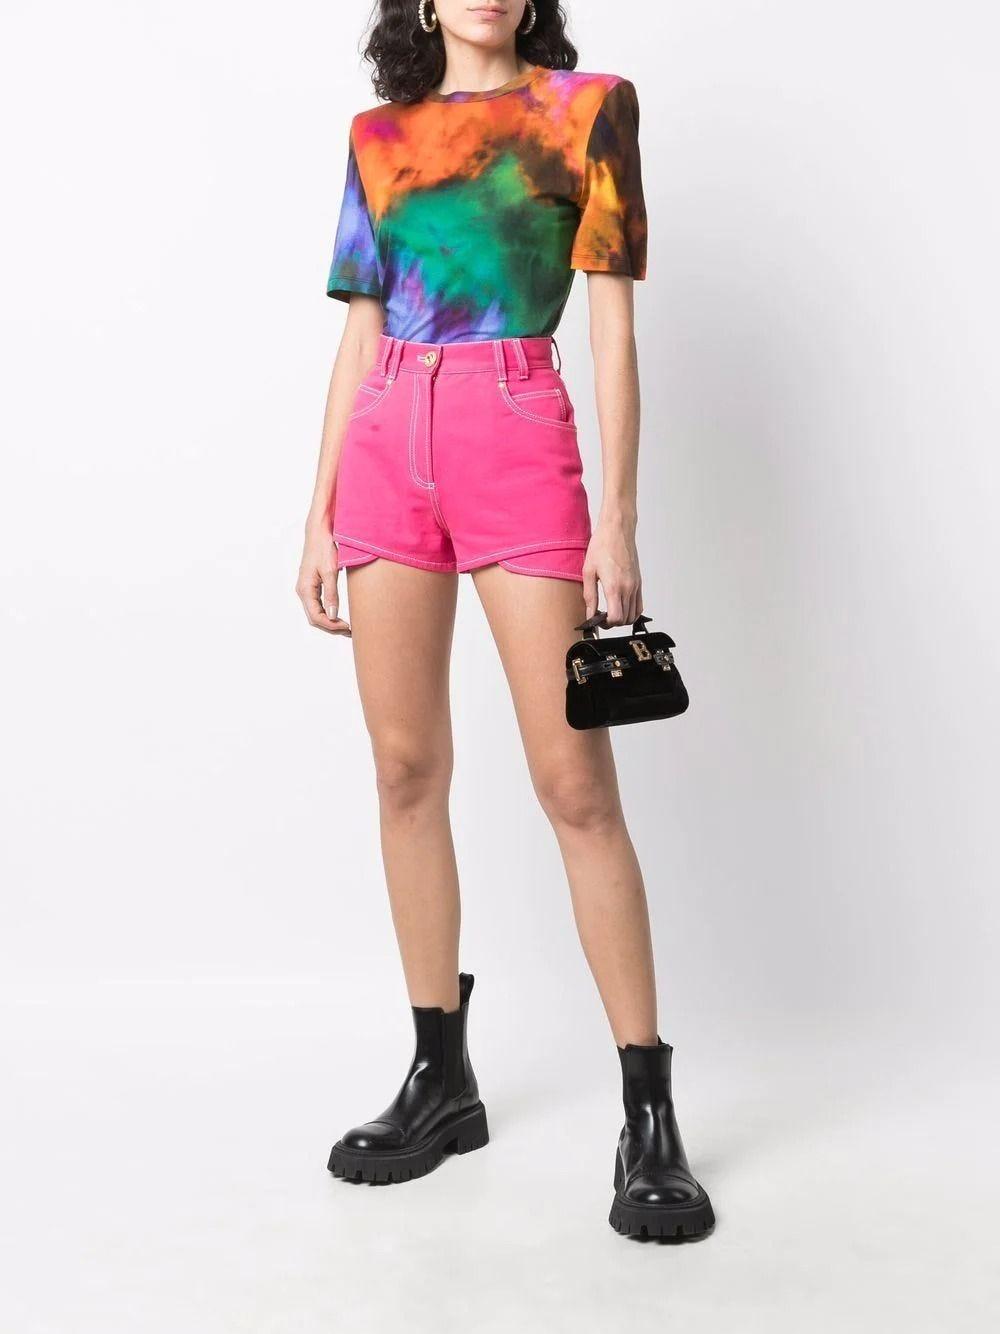 Rainbow Monogram Denim Shorts - Ready to Wear